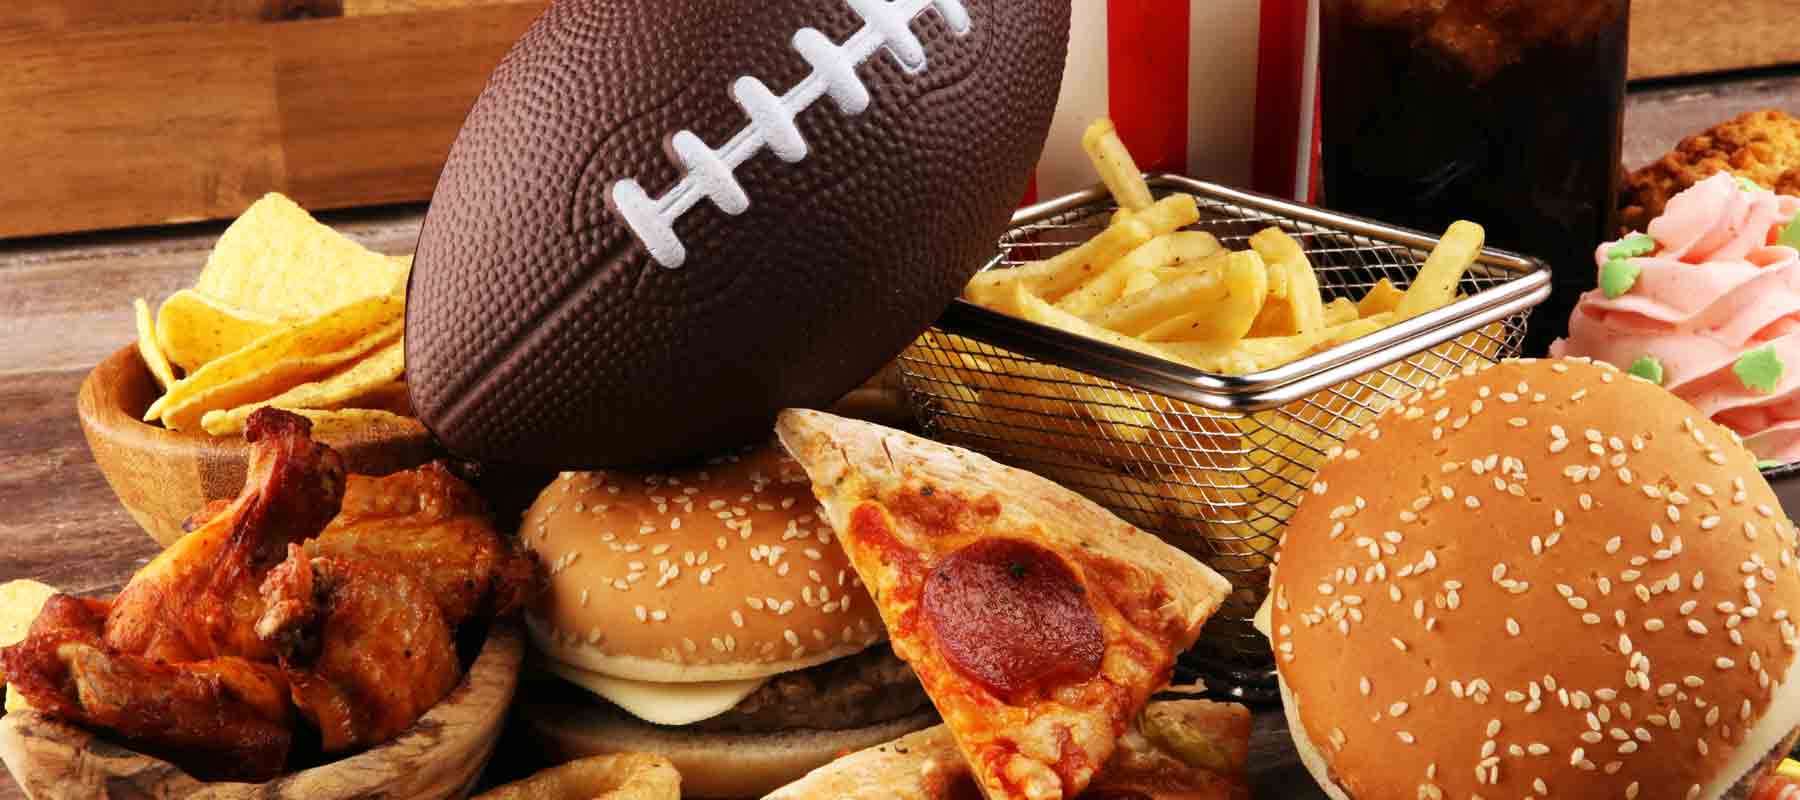 Top 5 Football Foods